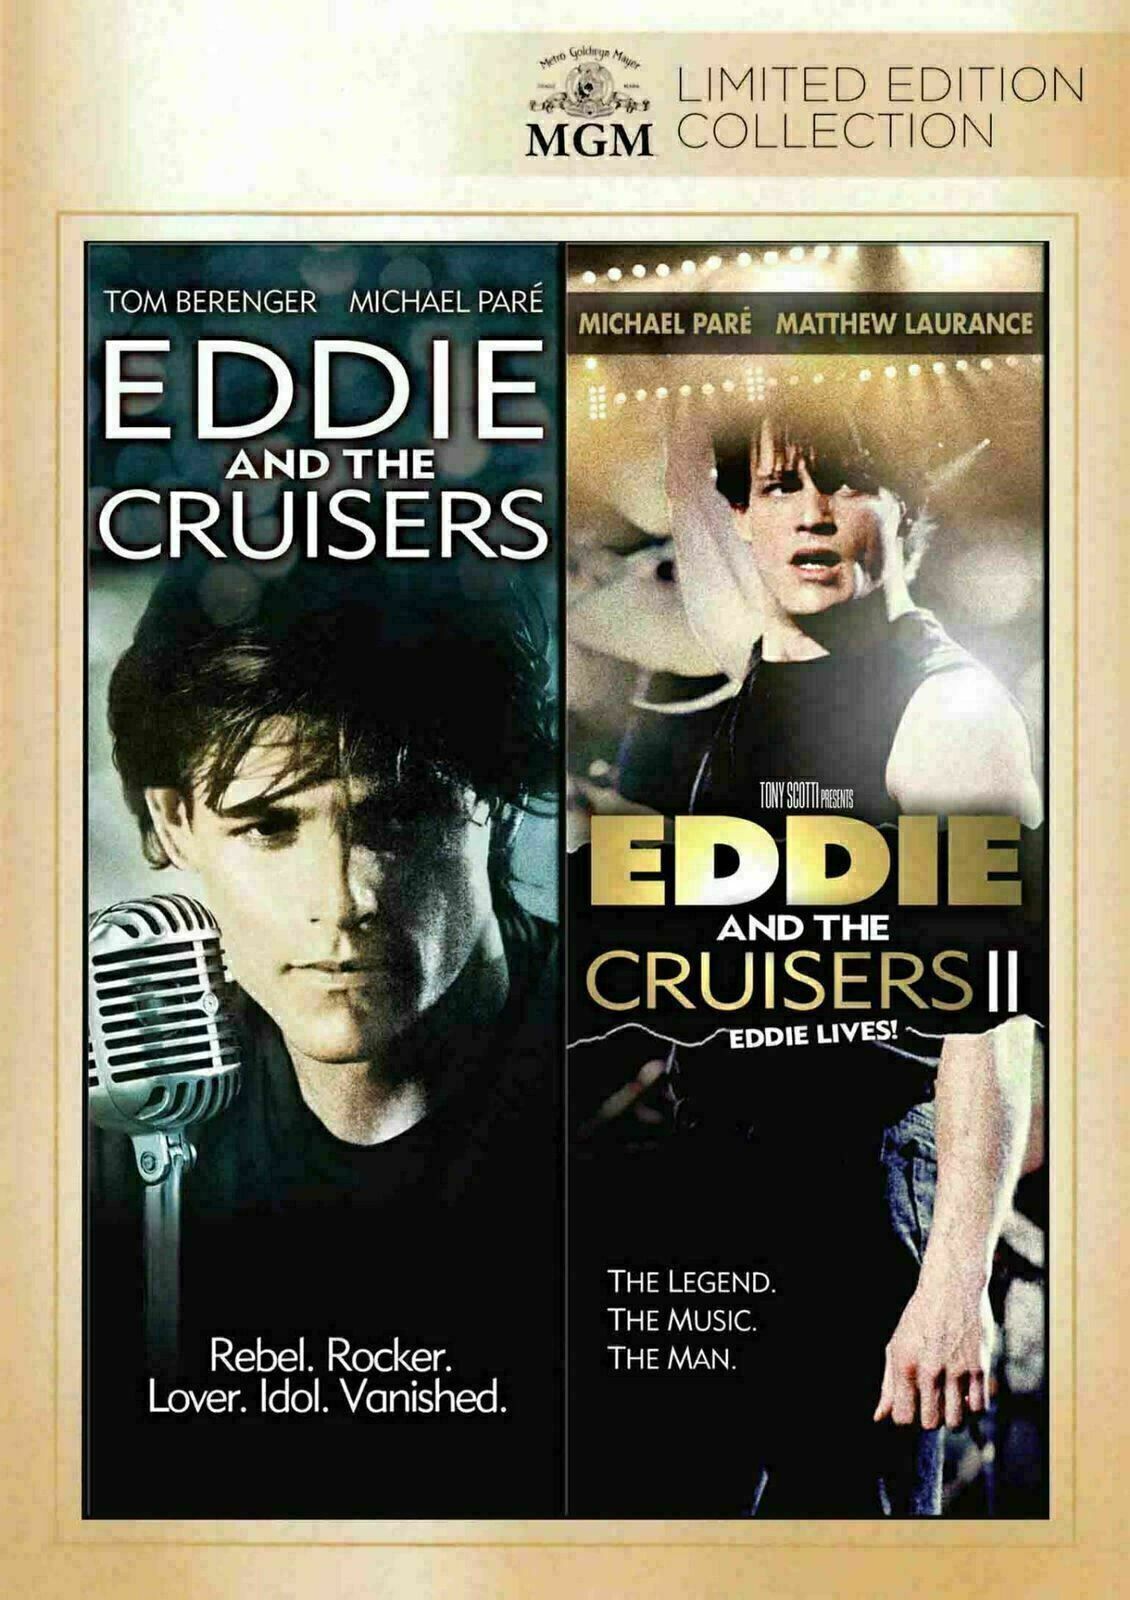 Eddie and the Cruisers / Eddie and the Cruisers II / DVD / Michael Pare